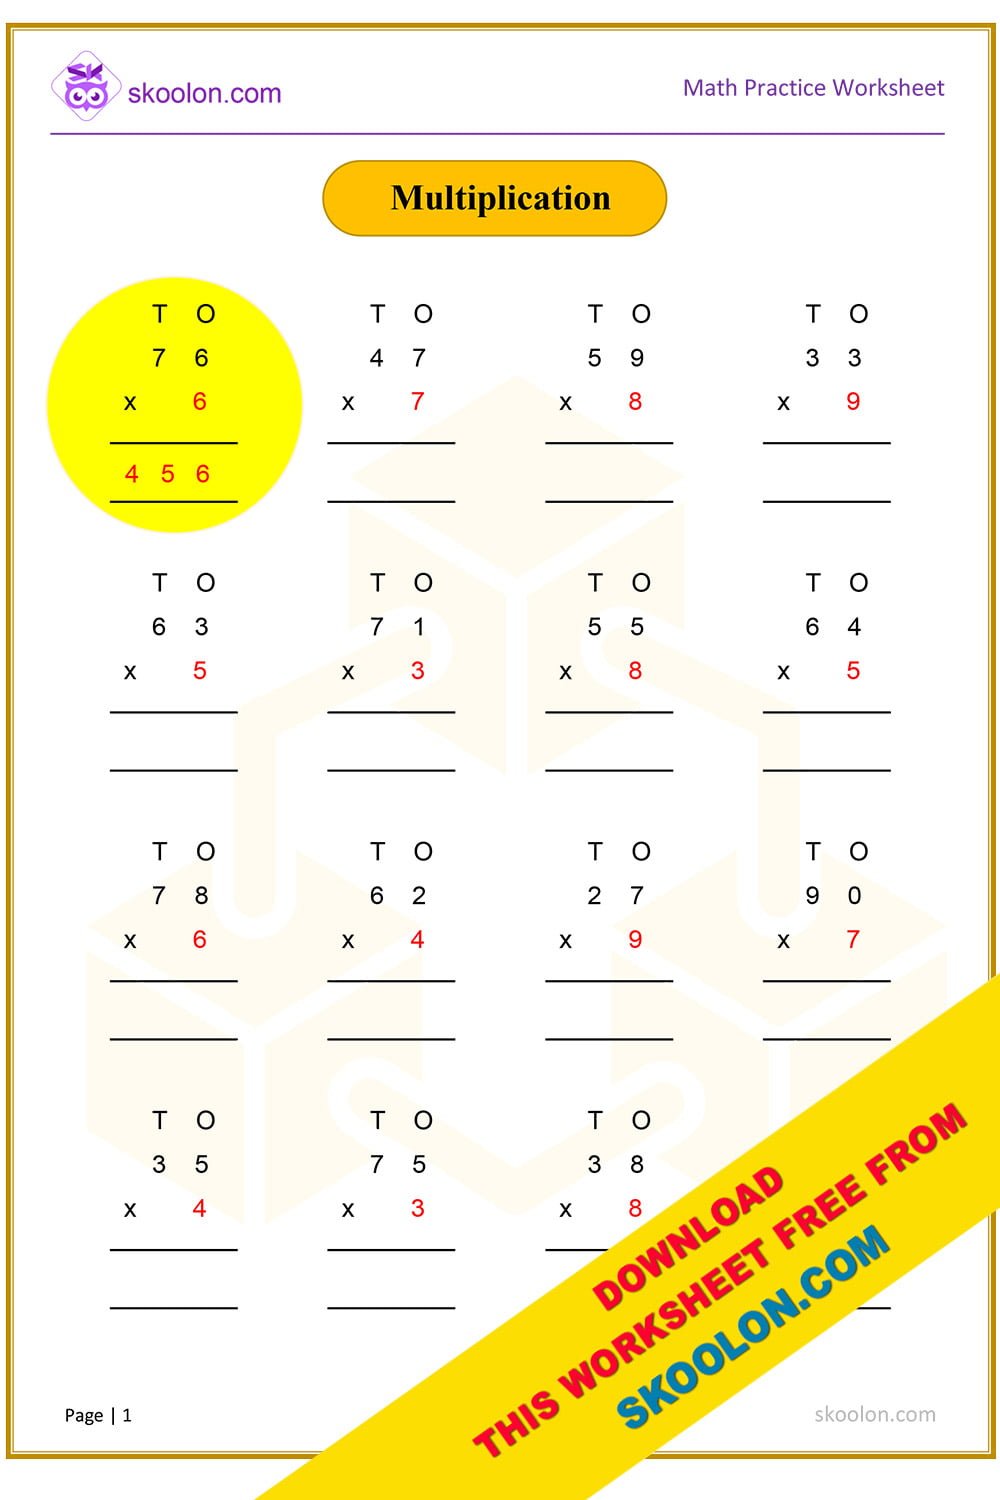 Multiplication Worksheet For Class 3 Icse